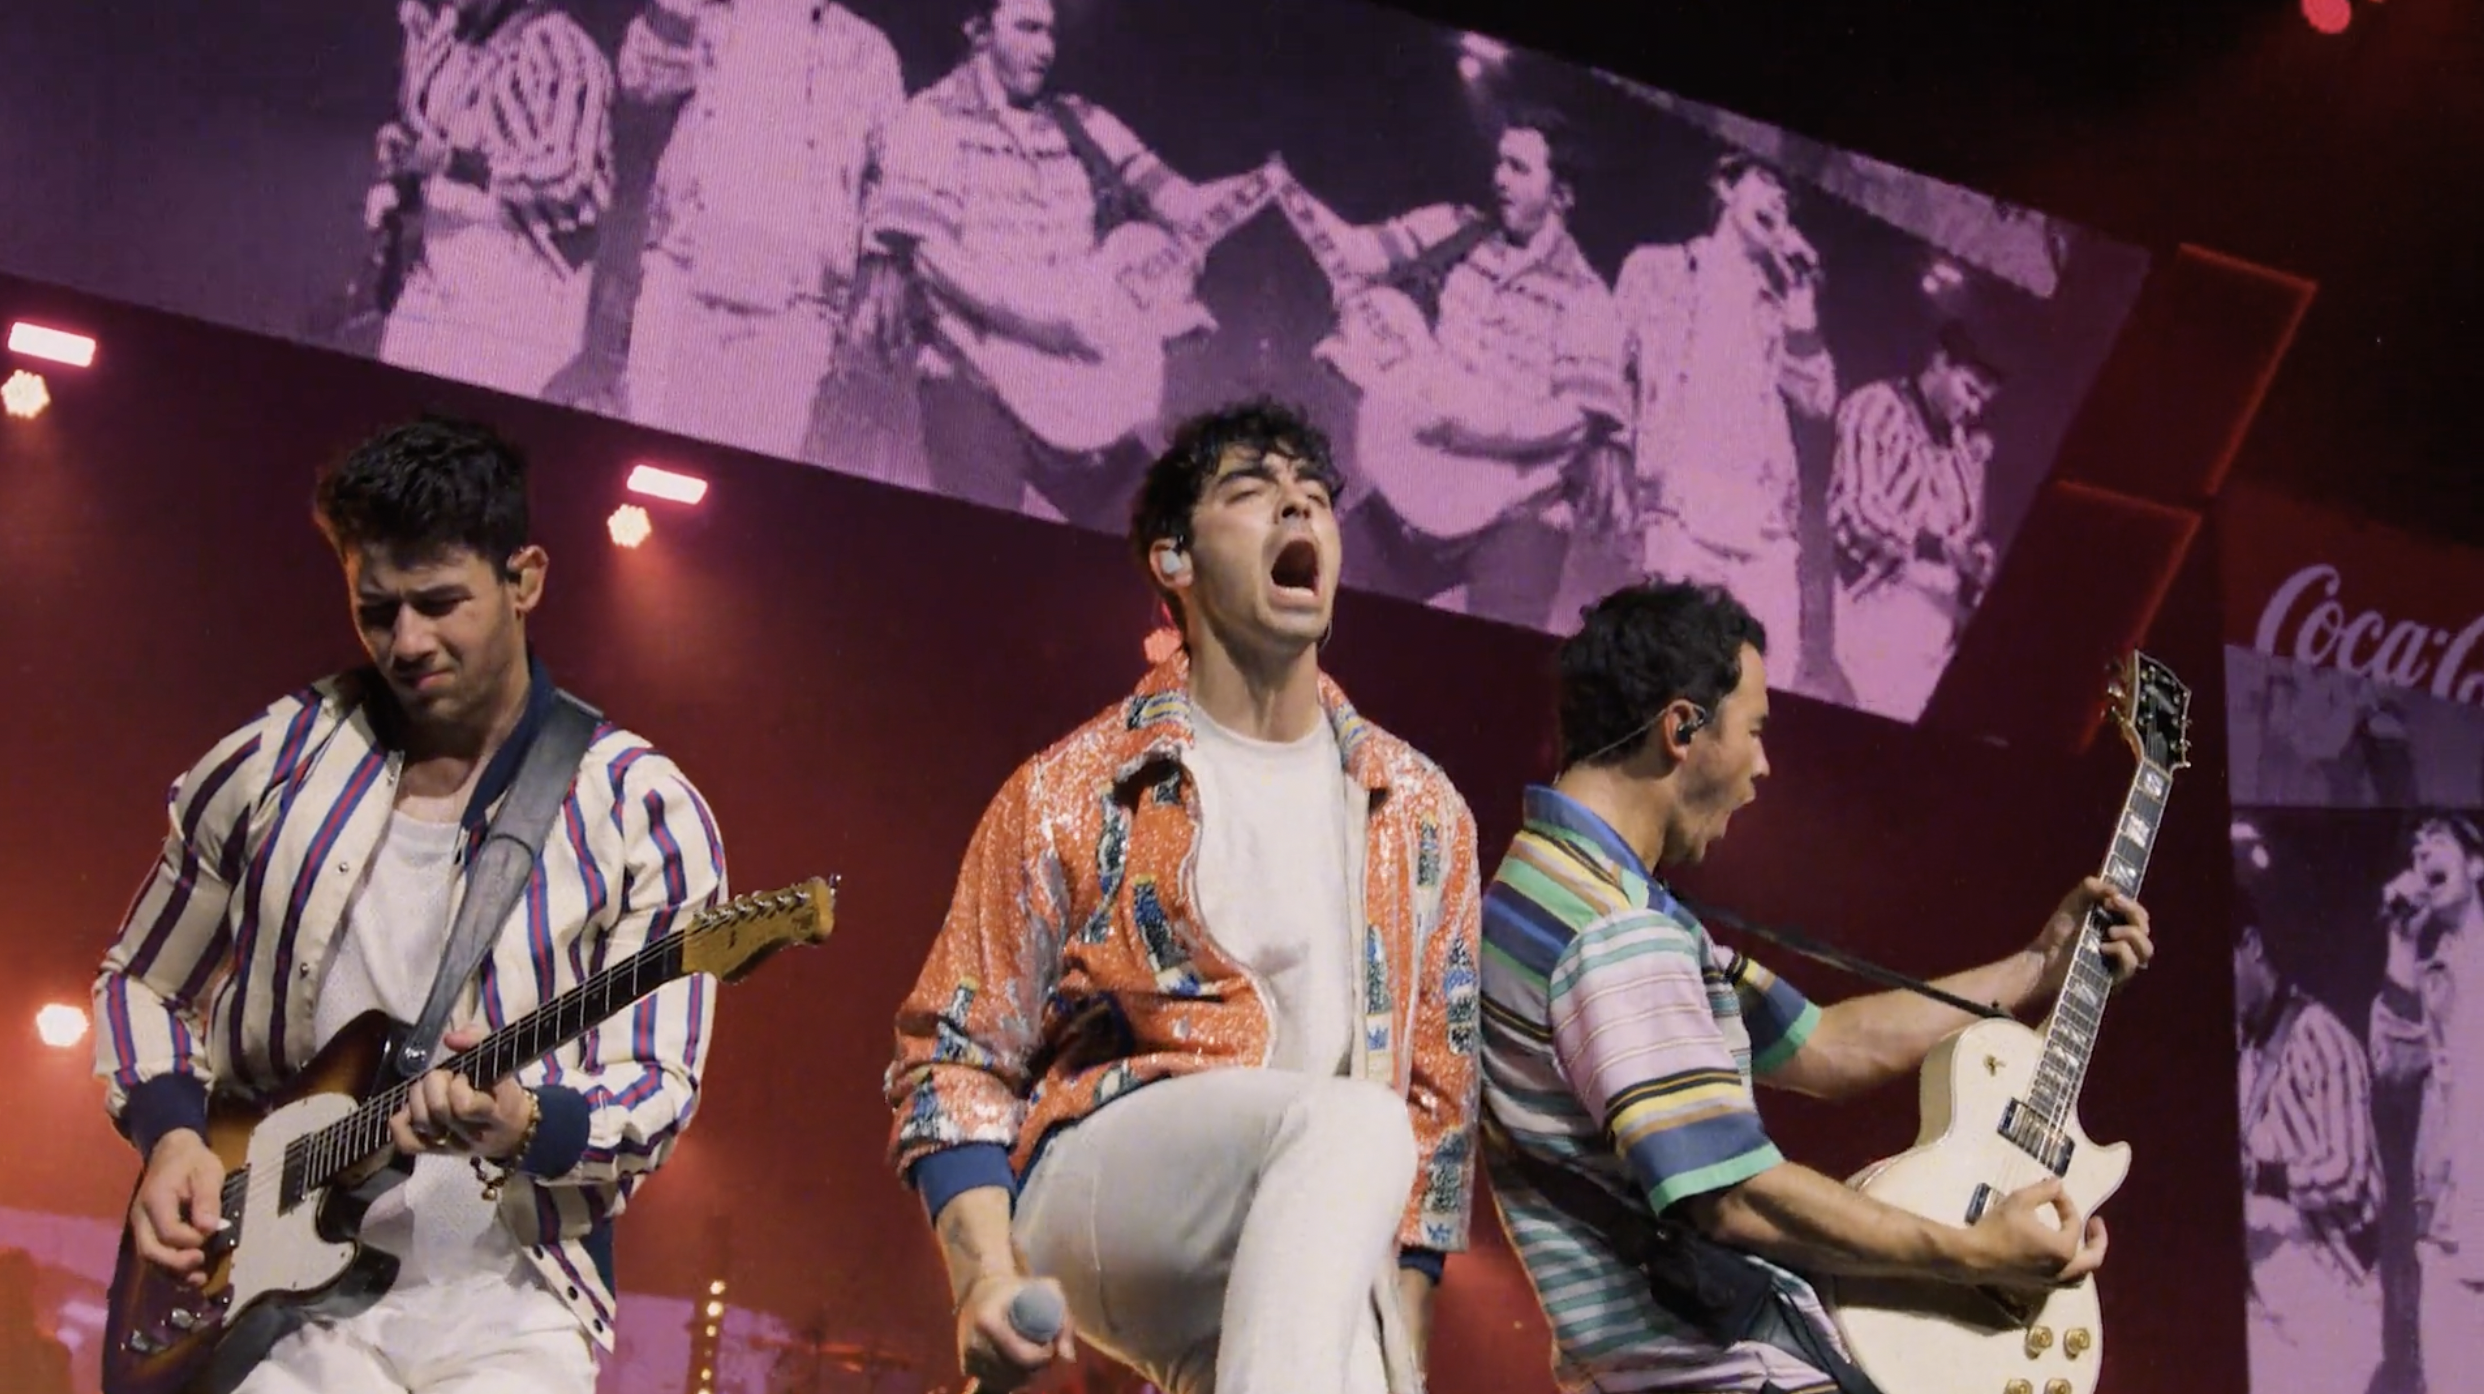 Jonas Brothers - Concert Promo